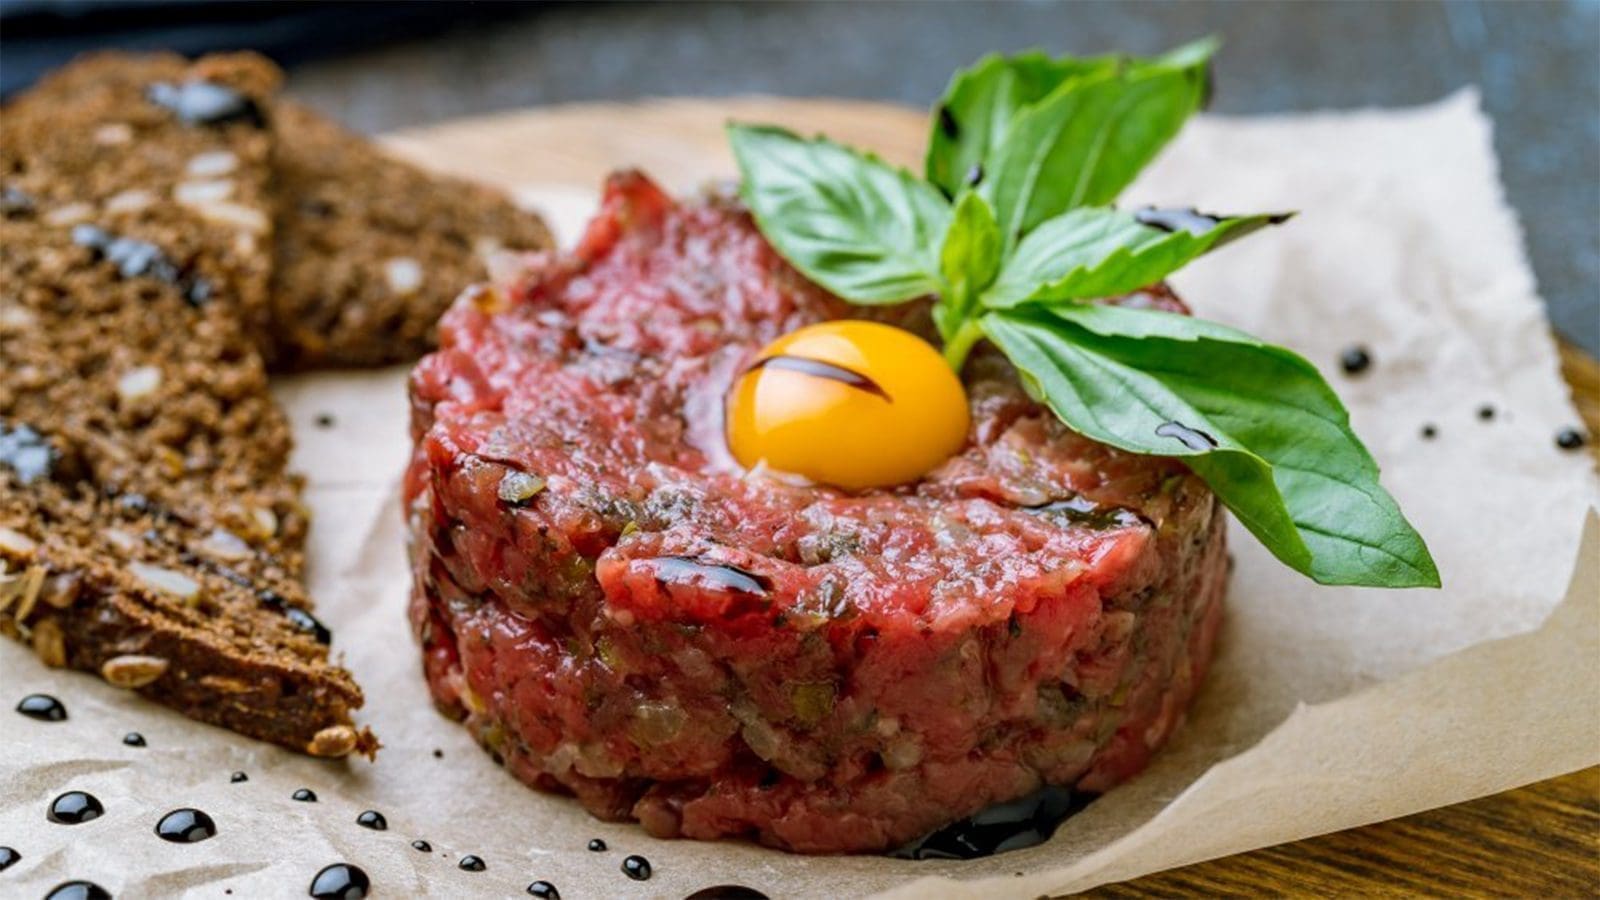 Slovenia’s food safety authority links Salmonella outbreak to steak tartare 